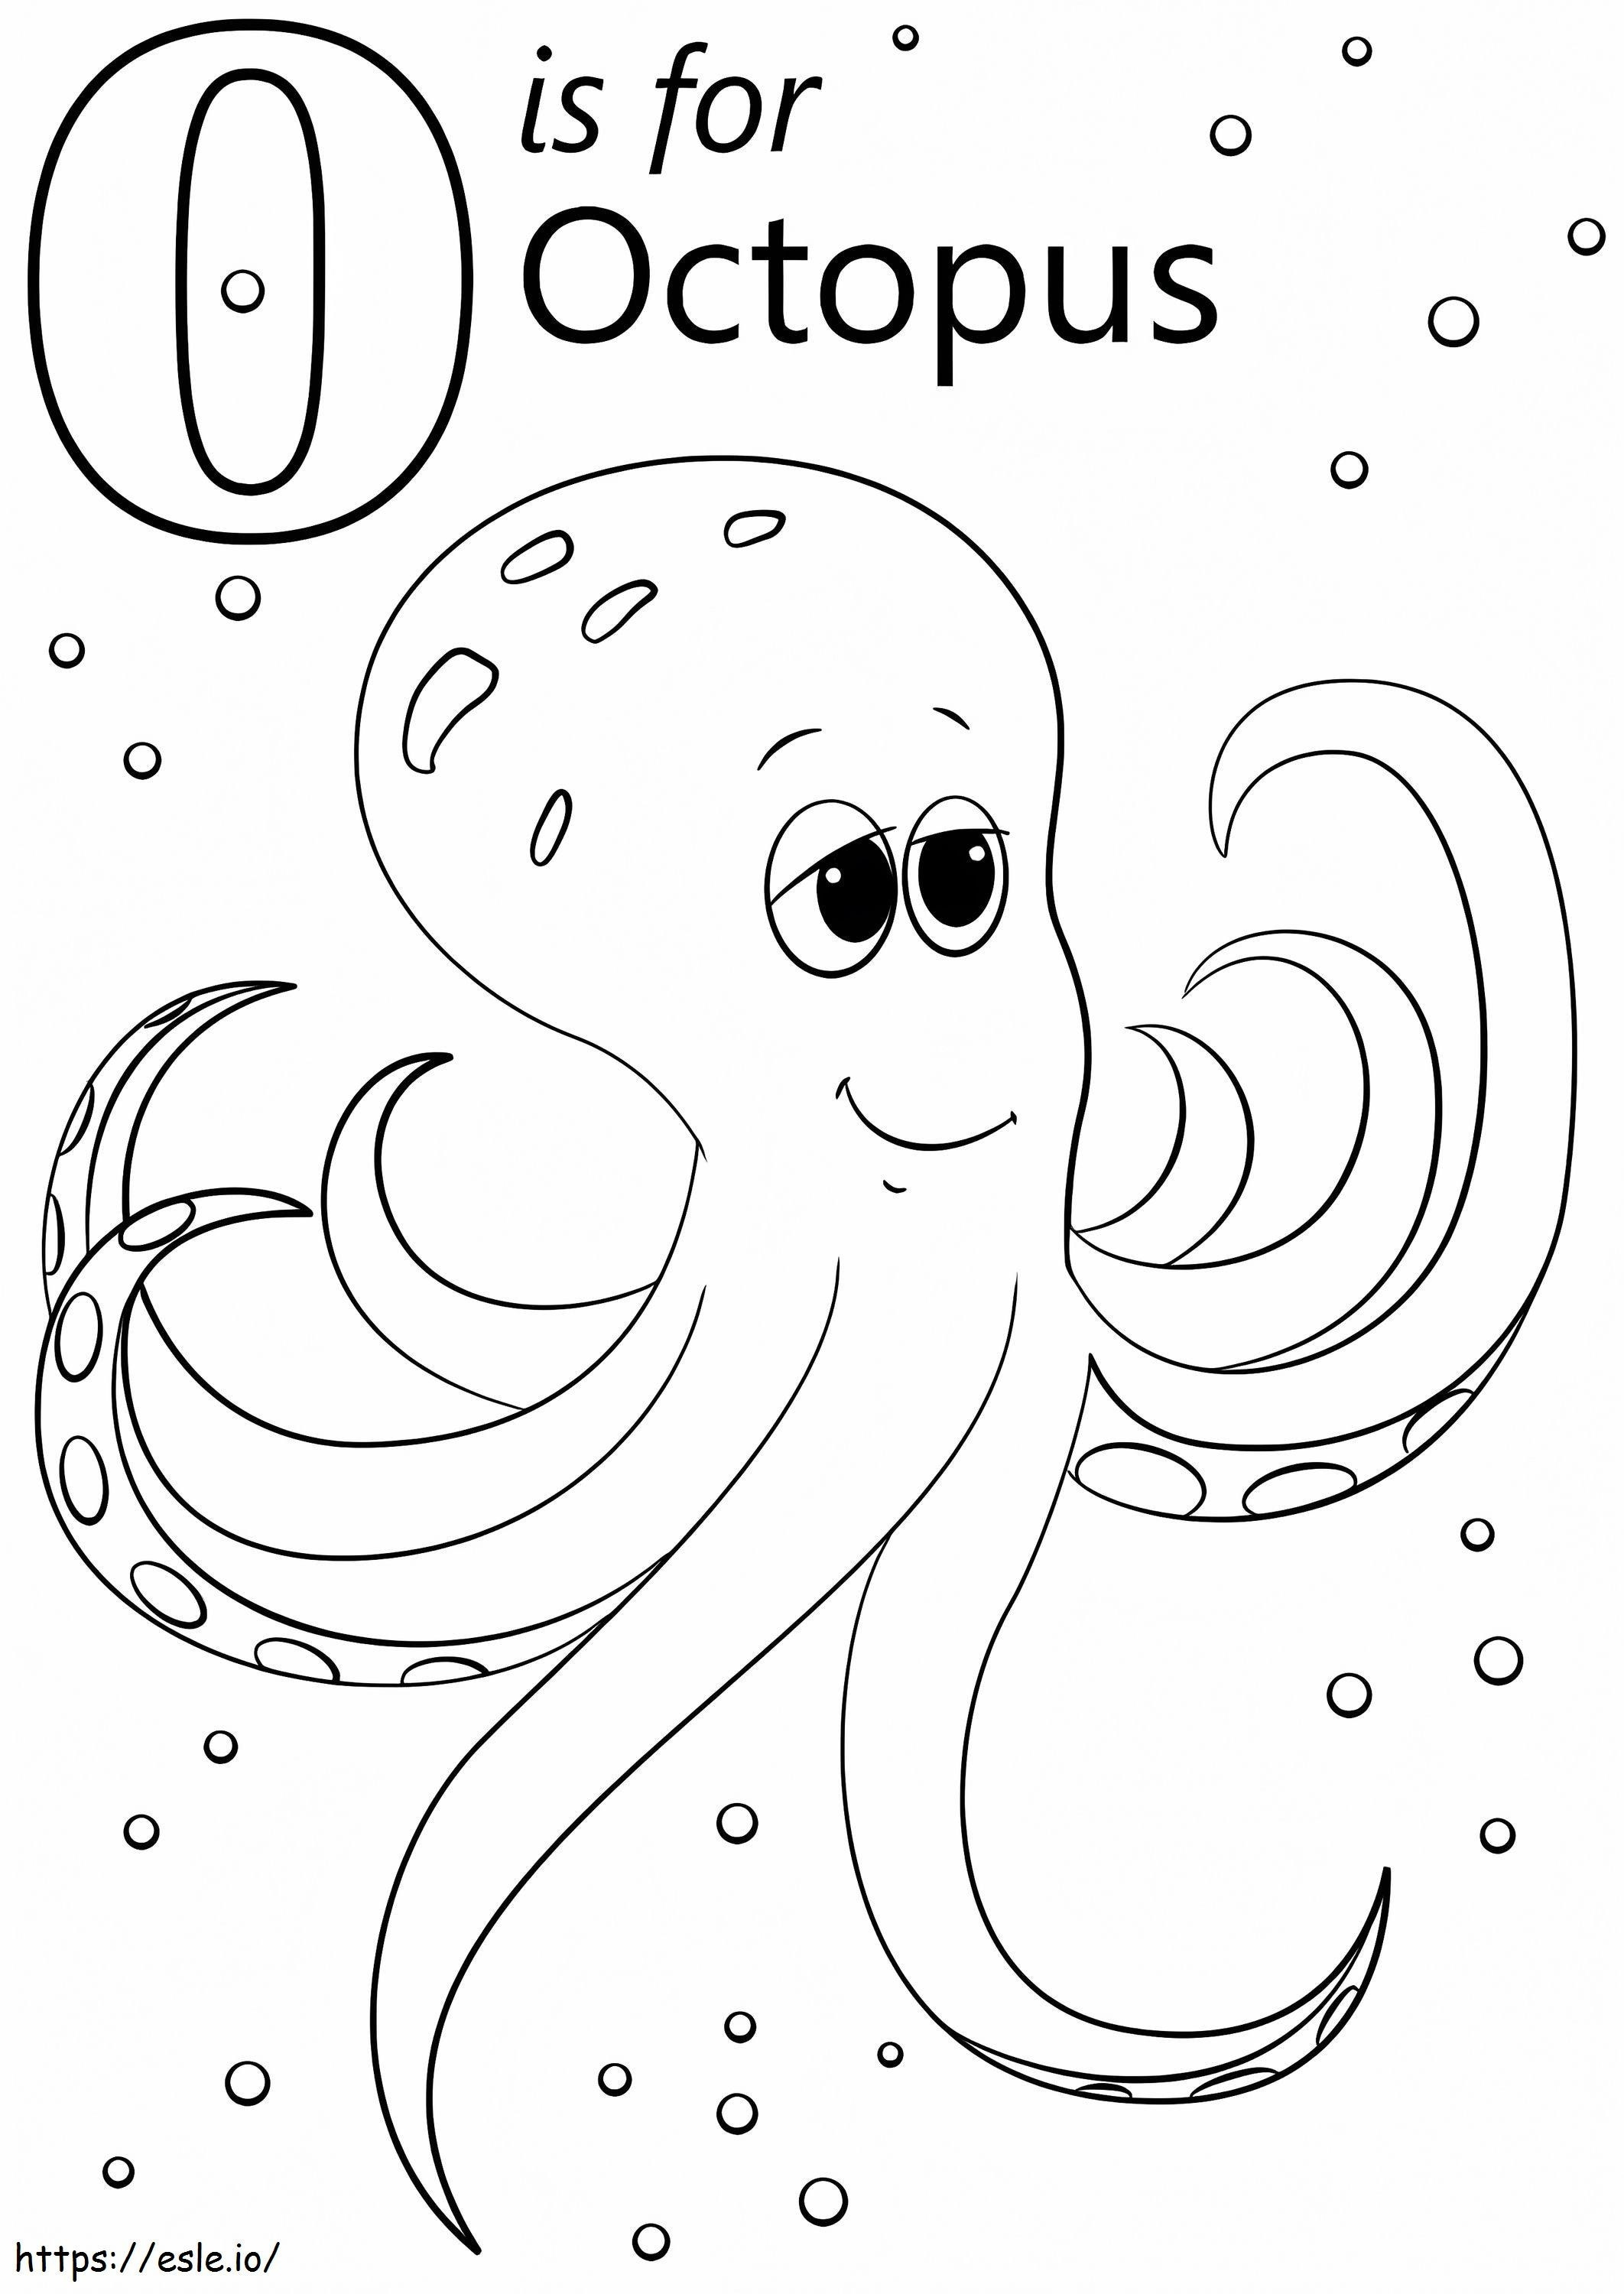 Oktopus-Buchstabe O ausmalbilder